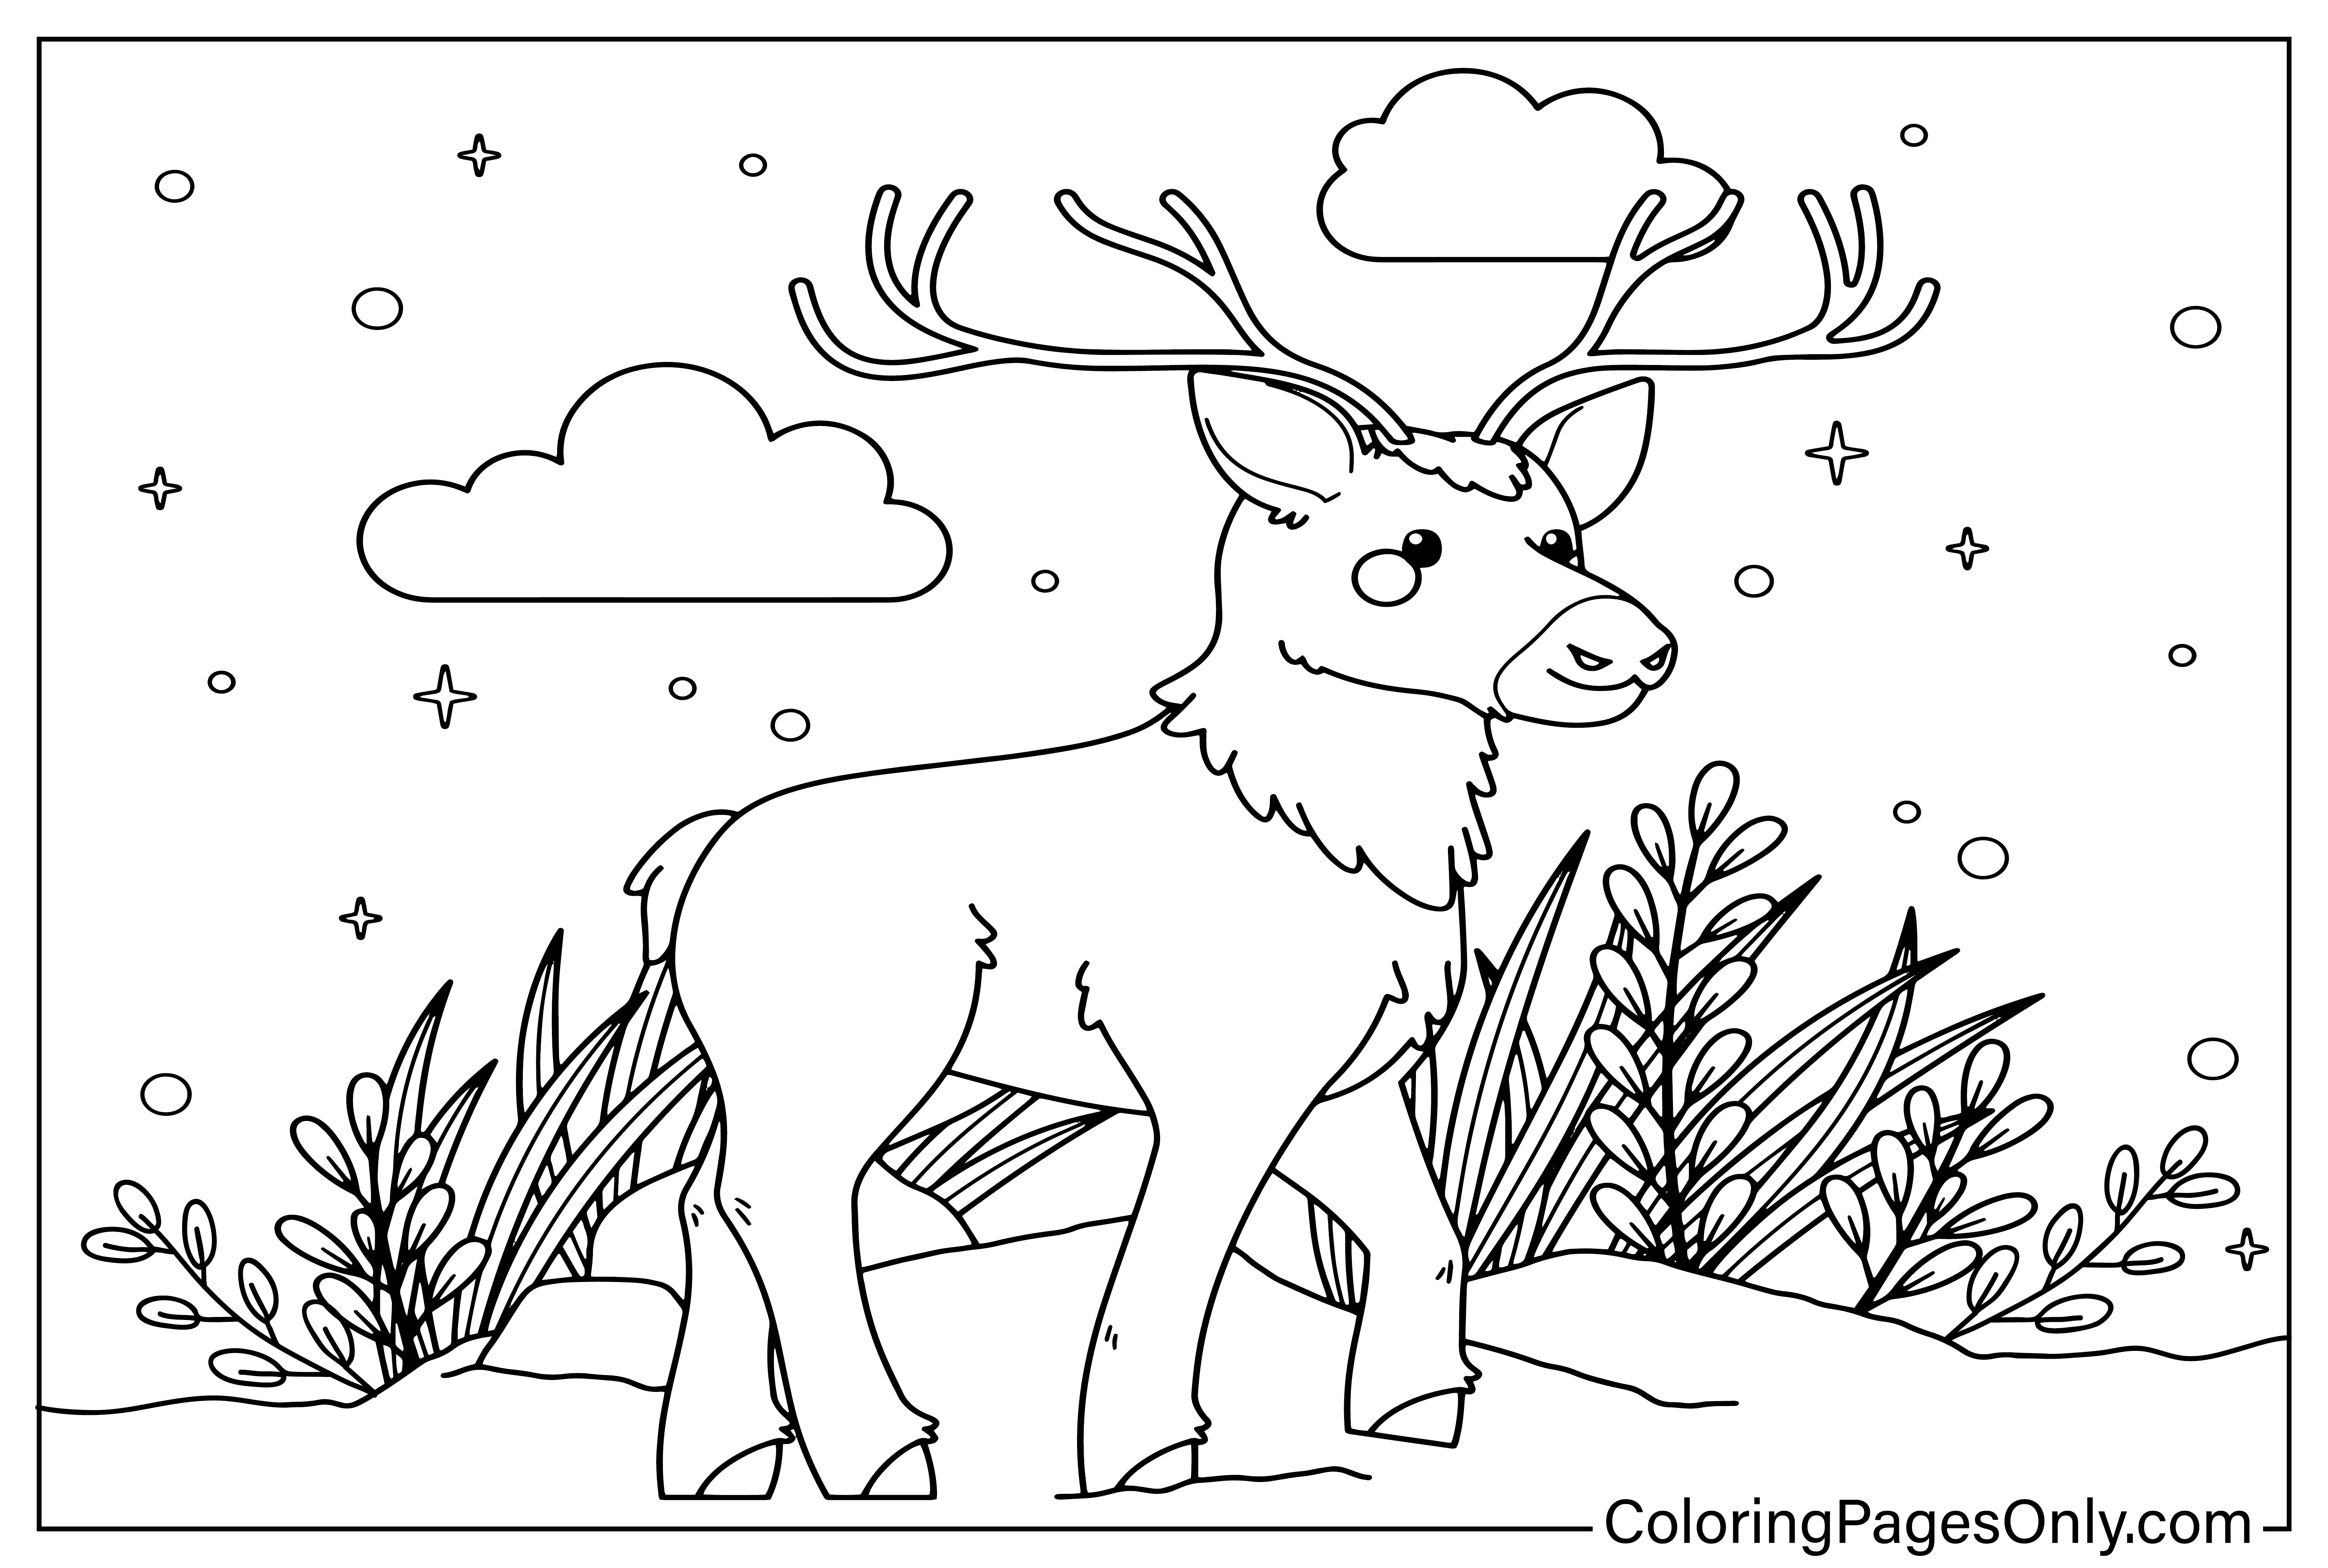 Free Printable Reindeer Coloring Page Free Printable Coloring Pages